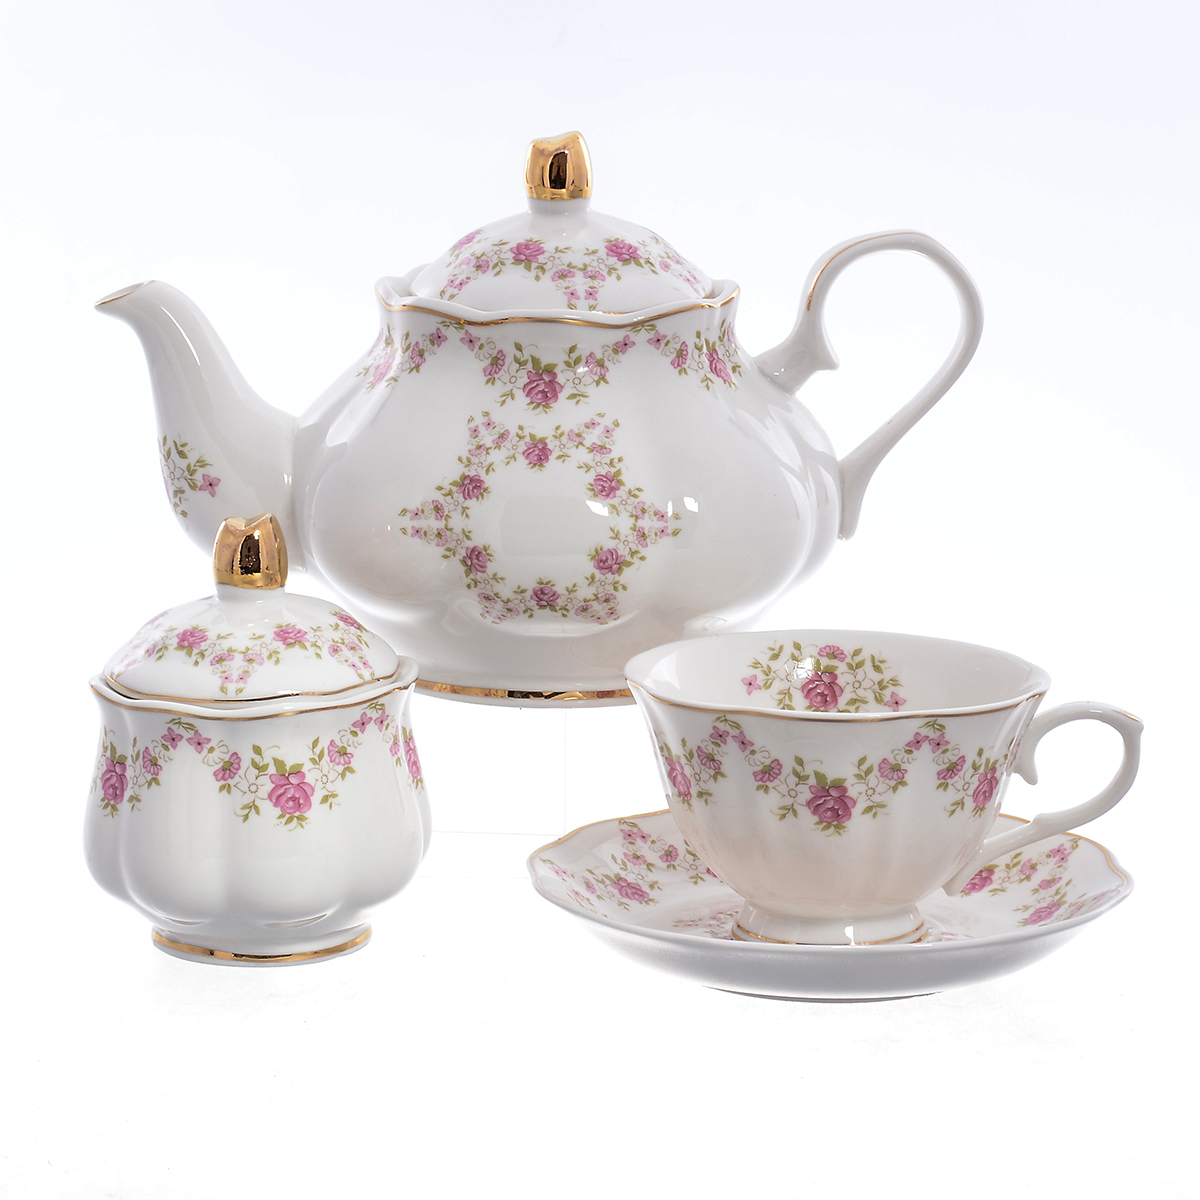 Сервизы royal. Чайный сервиз Royal Classics. Чайный сервиз Элегант коллекшн Роял 14 предметов. Royal Porcelain чайный сервиз. Чайный сервиз Роял Гарден.